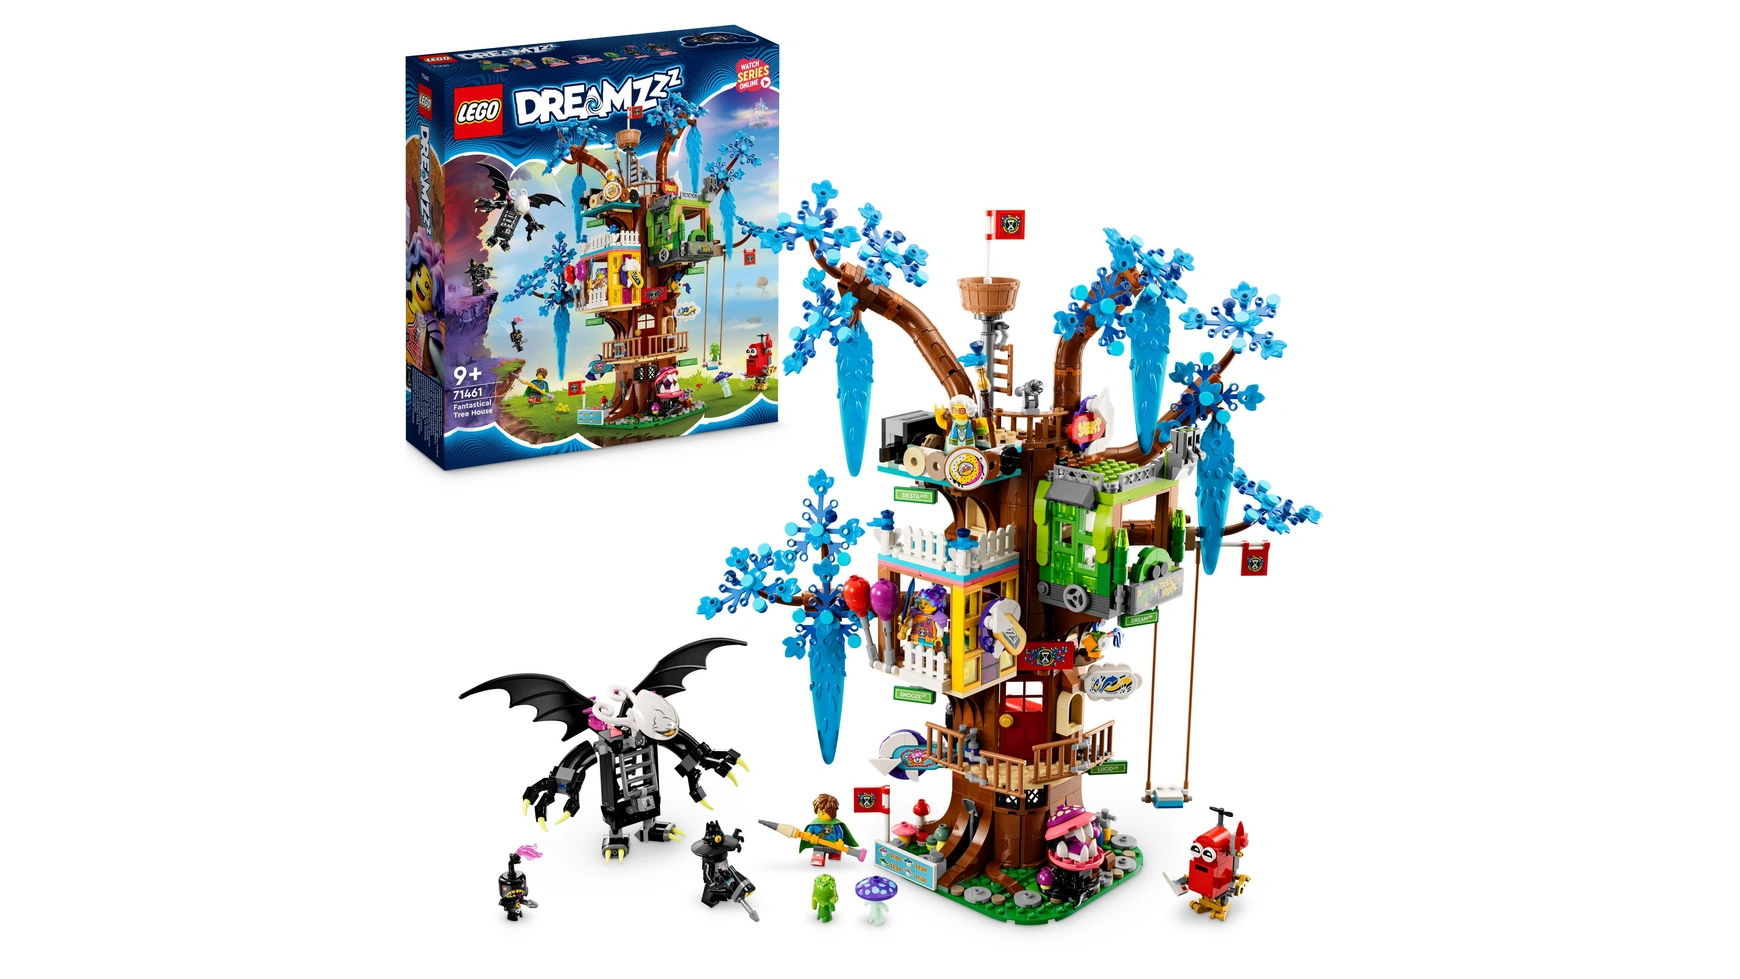 Lego DREAMZzz Фантастический домик на дереве, соберите 2 типа модели конструктор lego dreamzzz 71458 автомобиль крокодил